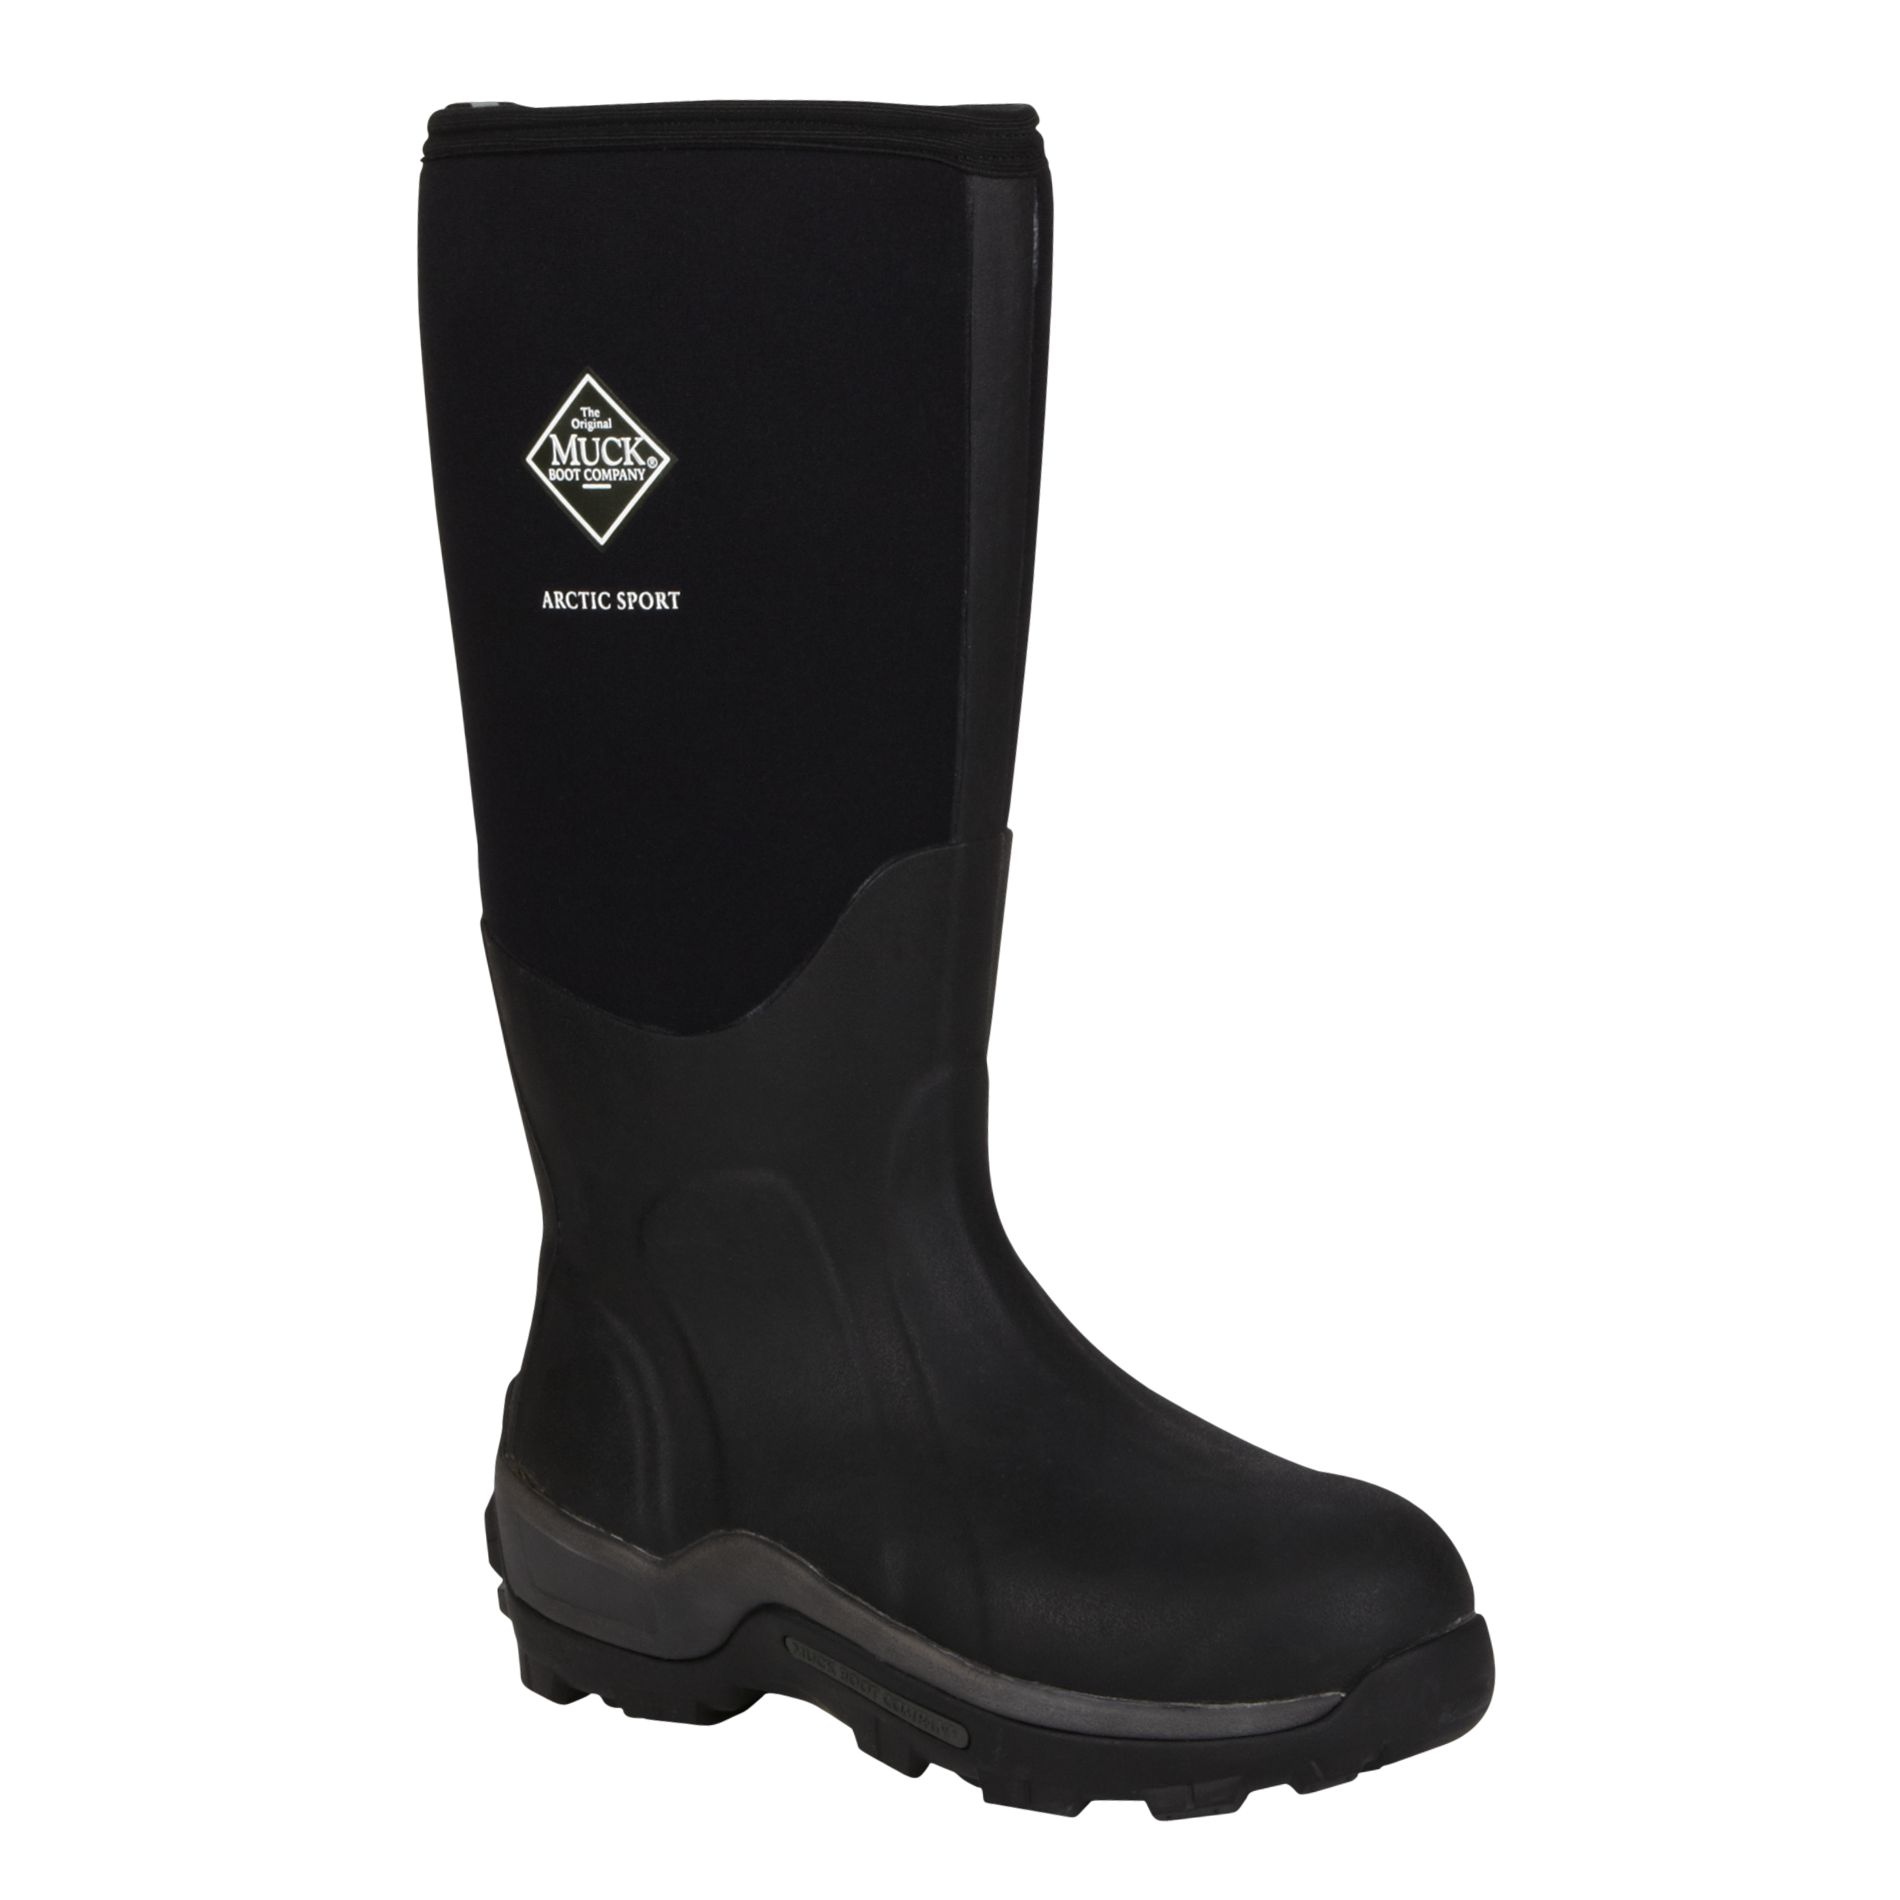 The Original Muck Boot Company Men's Arctic Sport Hi Waterproof Boot - Black